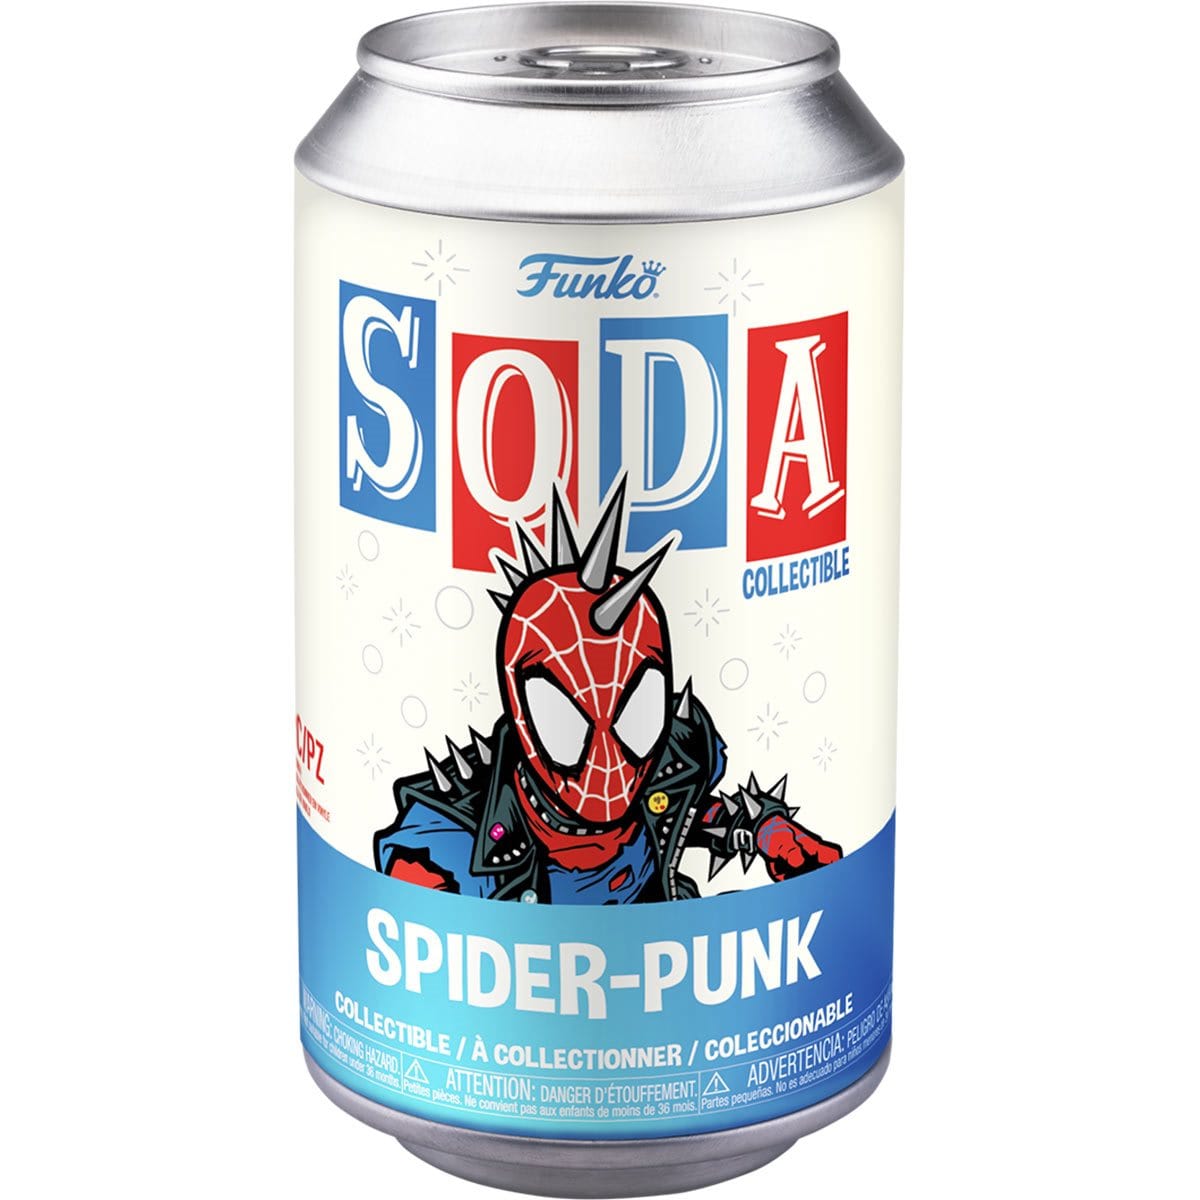 Spider-Man-Across-the-Spider-Verse-Spider-Punk-Vinyl-Funko-Soda-Figure-SODA-CAN-TOY